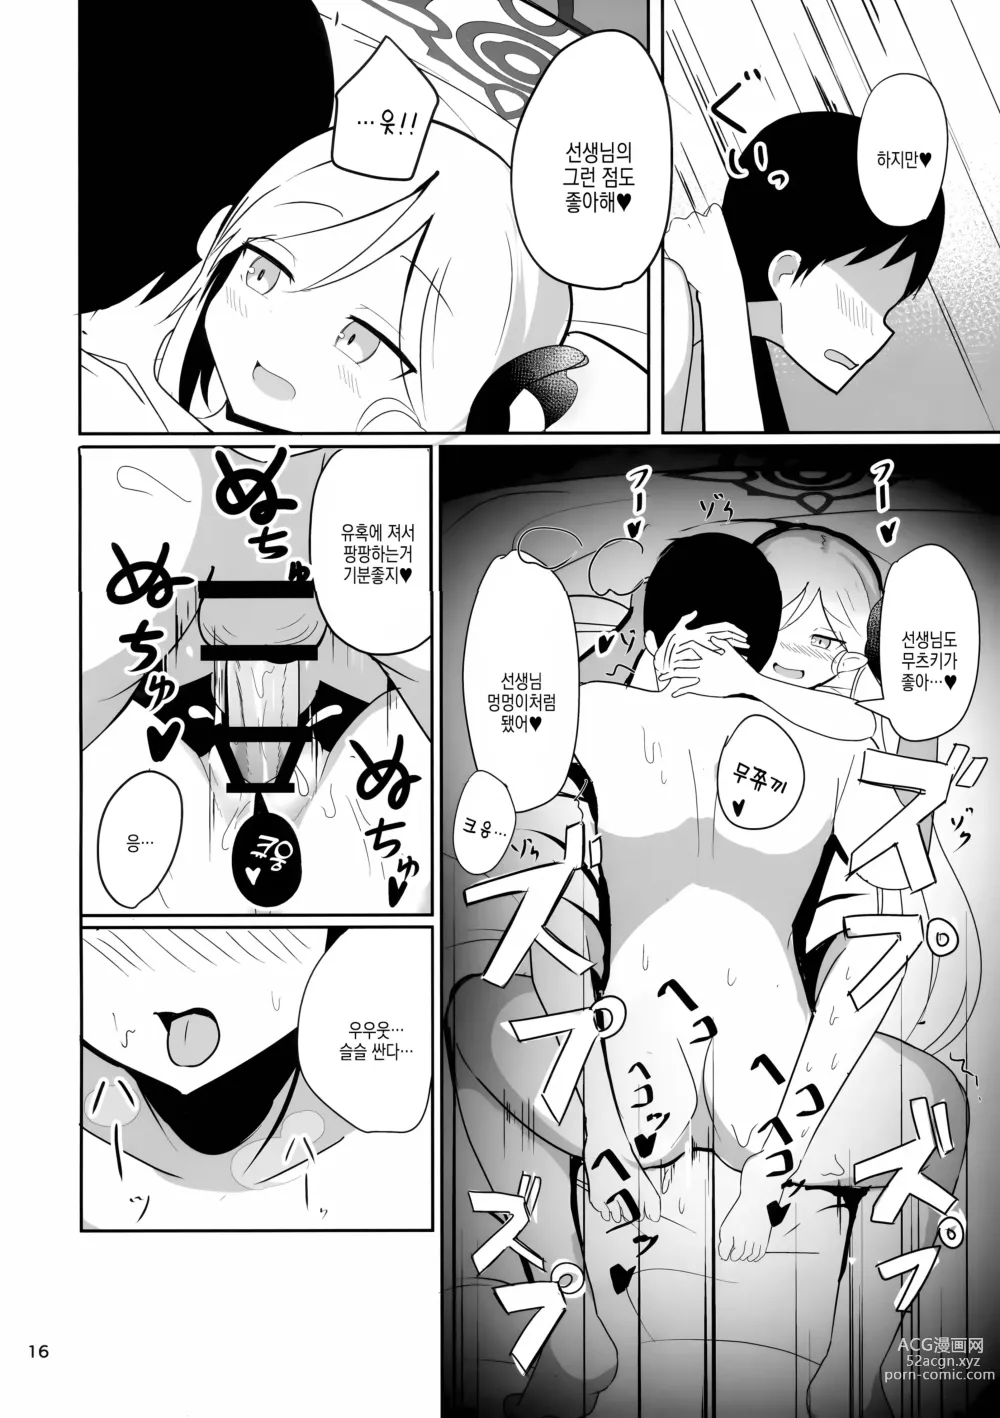 Page 17 of doujinshi 무츠키 쨩과 놀자